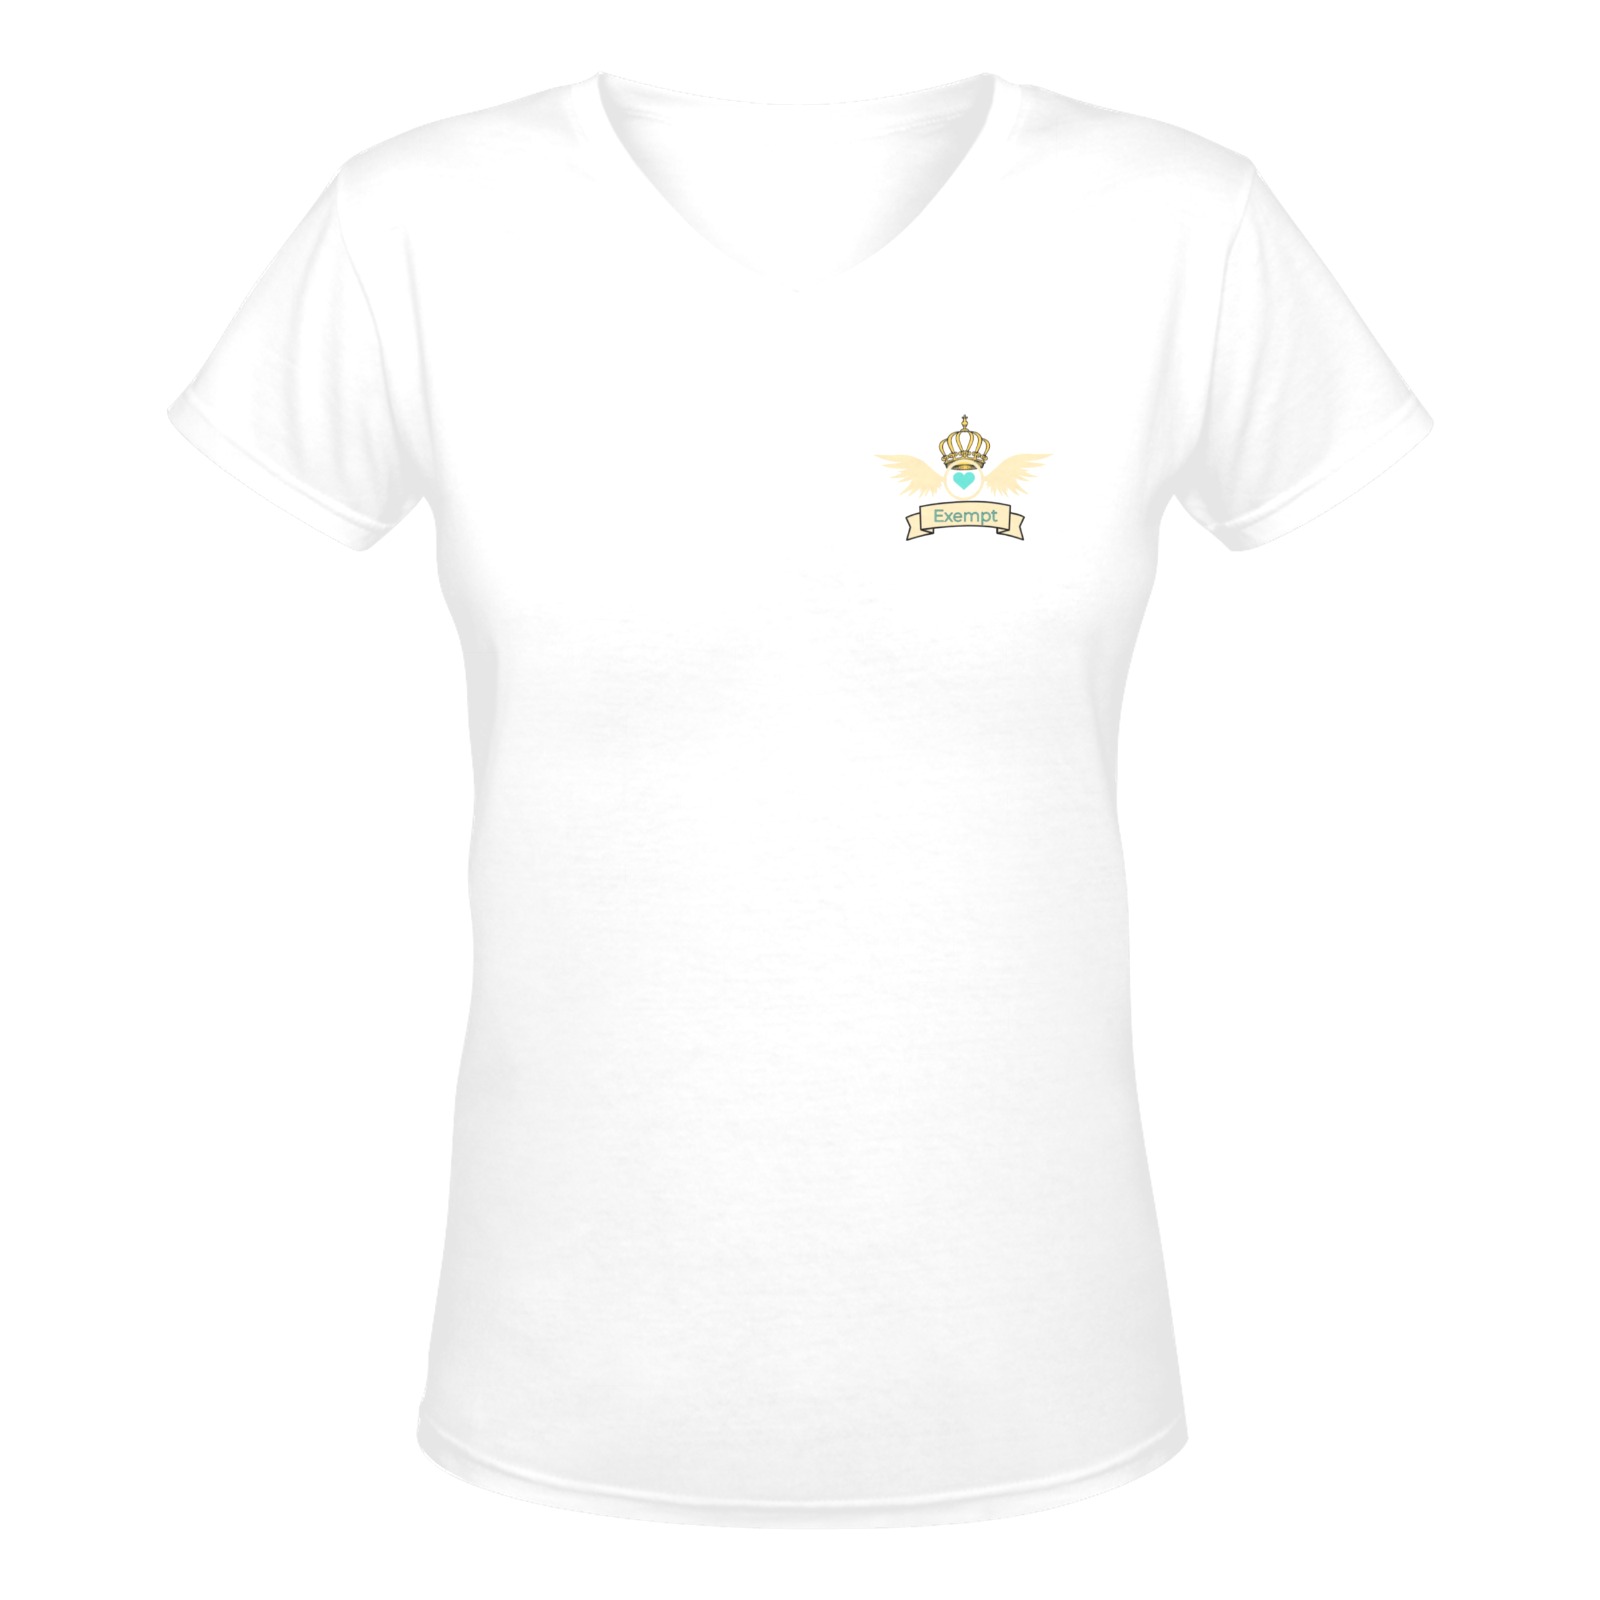 'Exe.mpt' - Small pocket logo - White Tee Women's Deep V-neck T-shirt (Model T19)